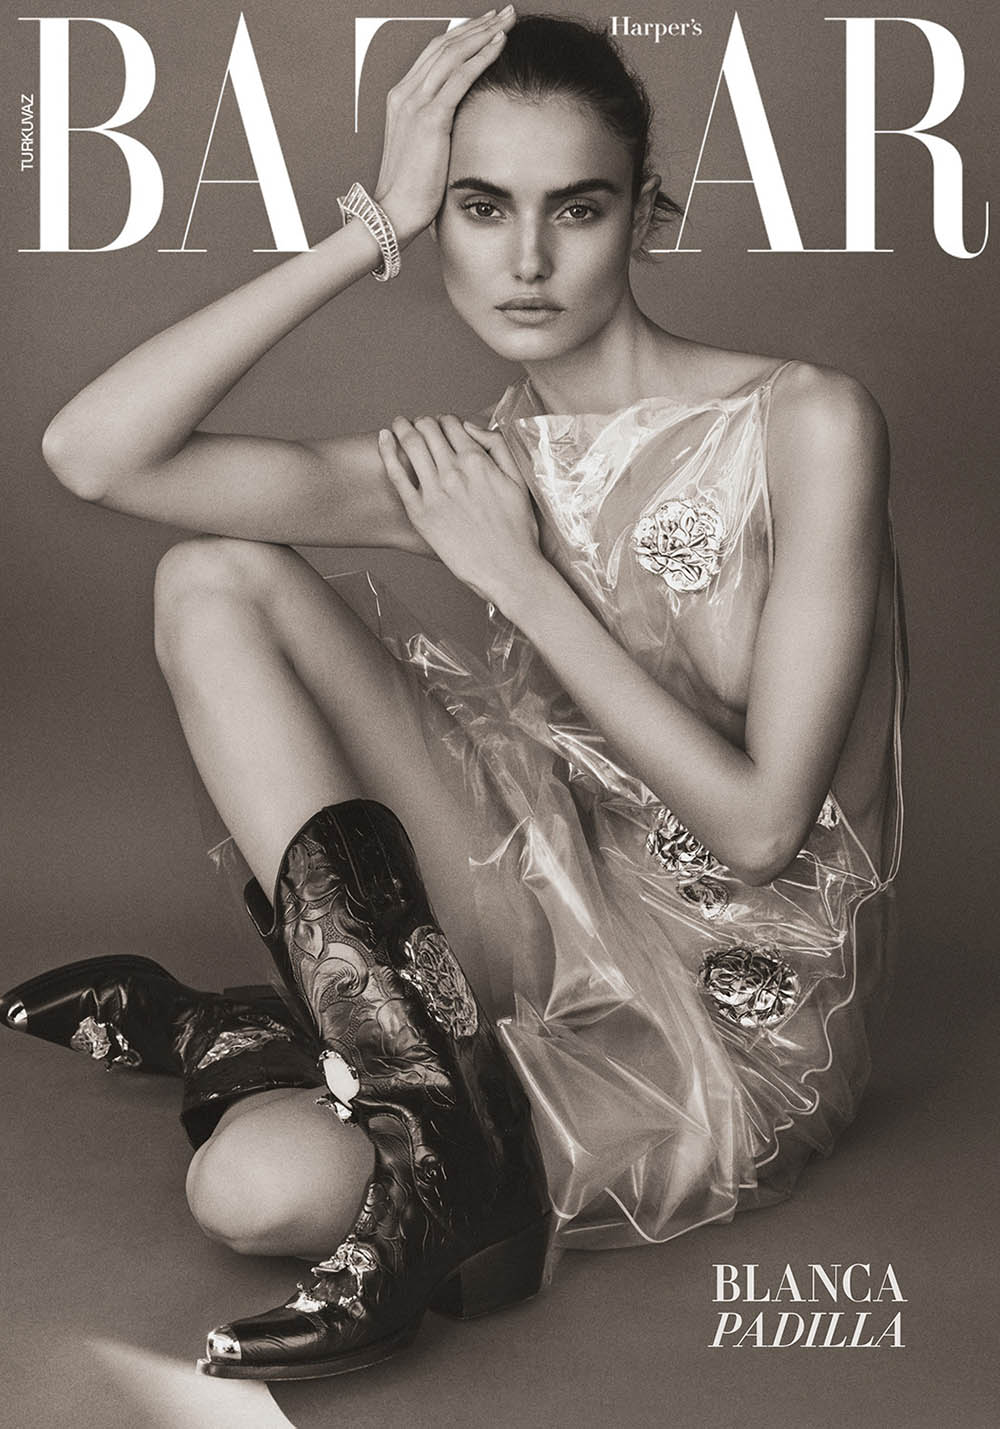 Blanca Padilla covers Harper’s Bazaar Turkey January 2018 by Tom Schirmacher